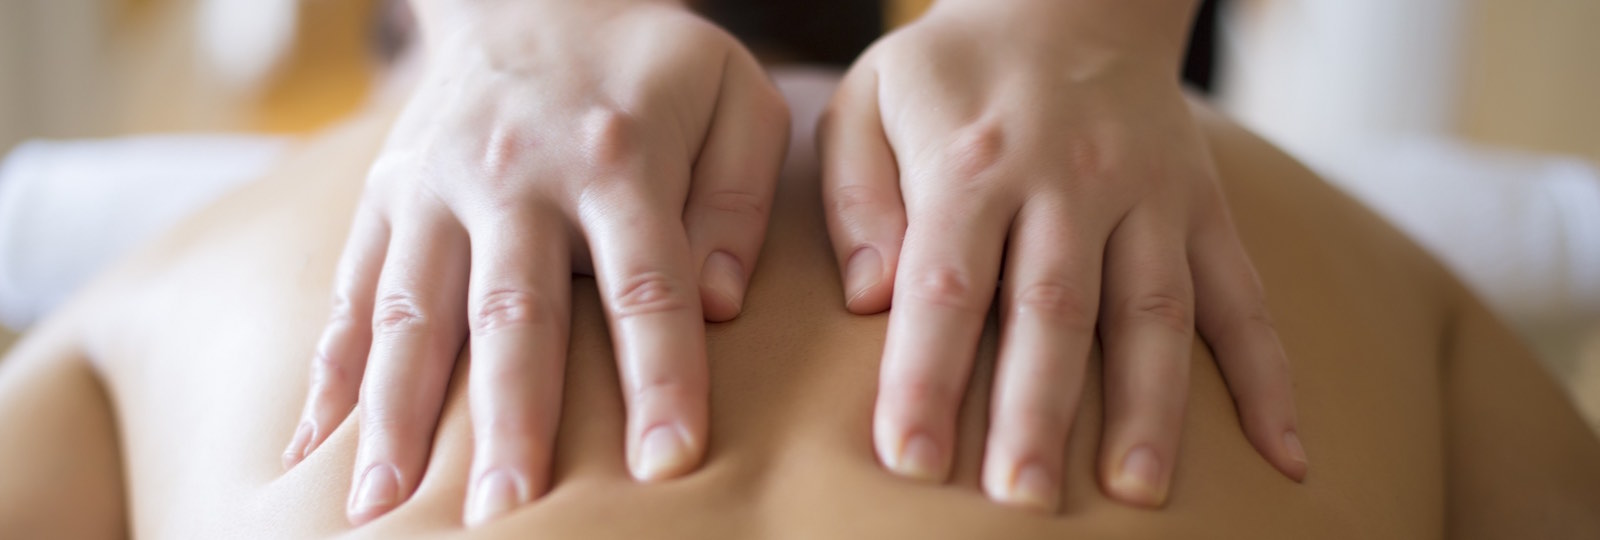 Sydney Remedial Massage - Sydney CBD. Remedial, Sports & Pregnancy Massage. Health fund rebates